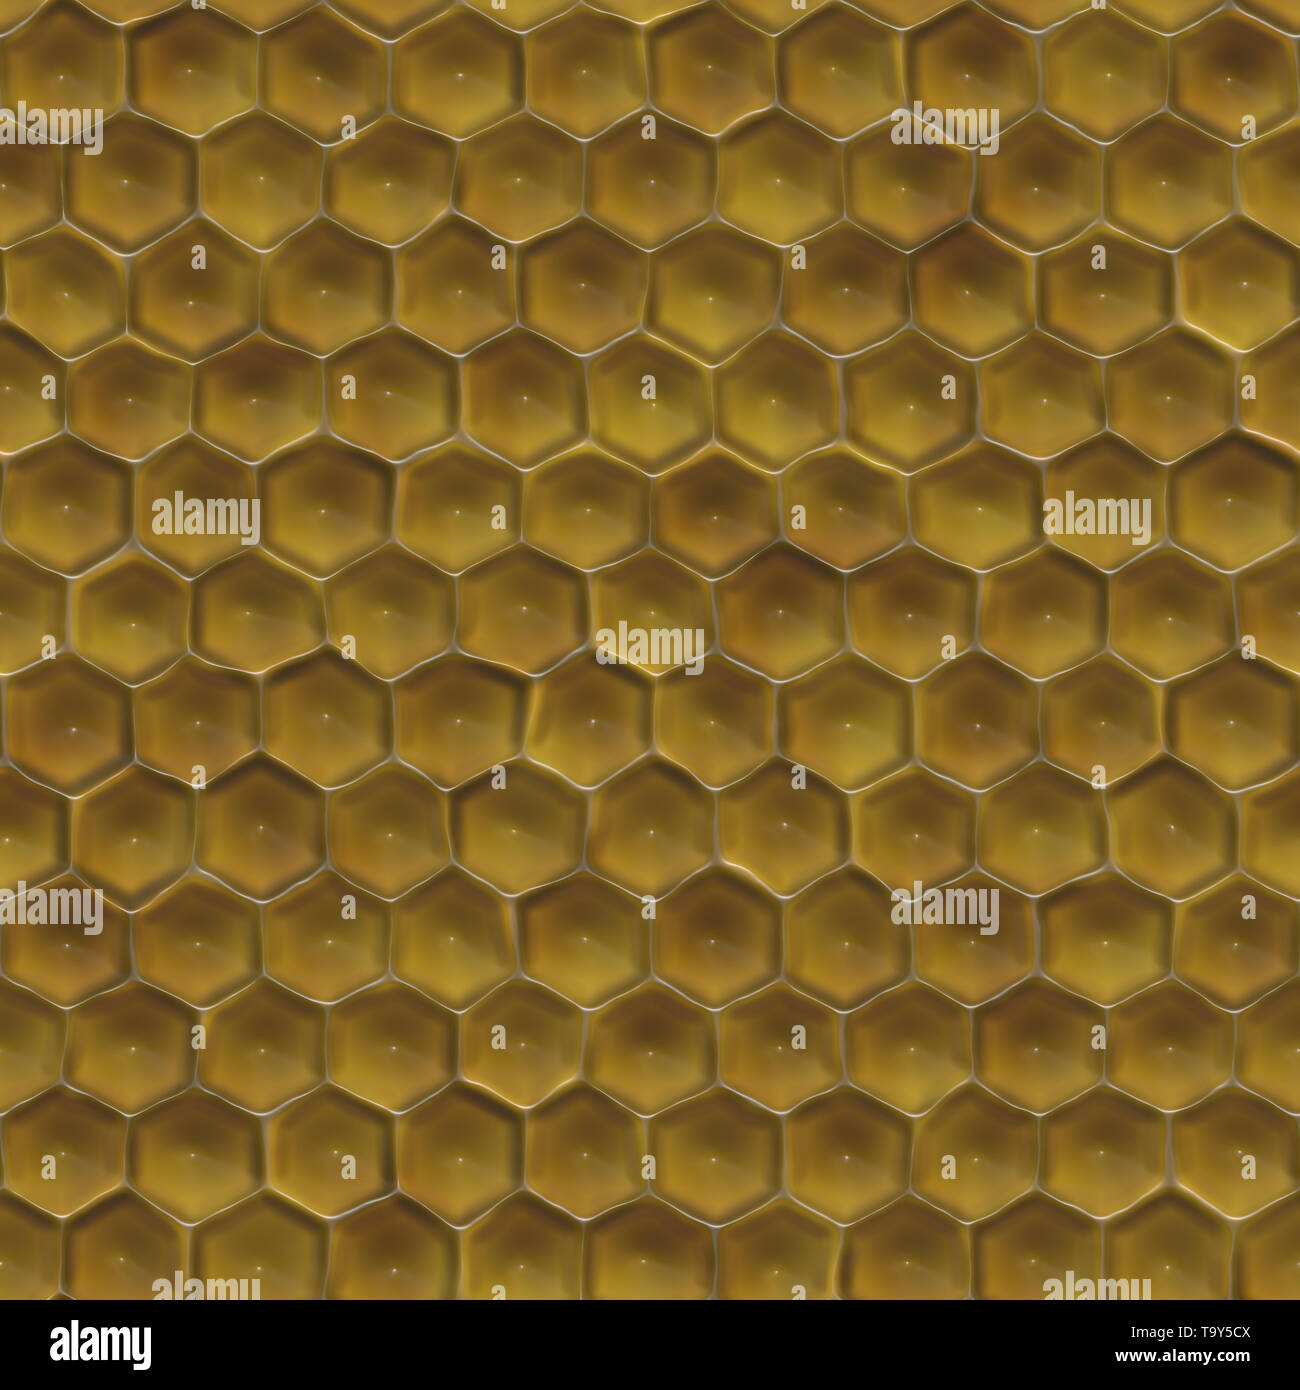 Honeycomb Seamless Texture Tile Stock Photo